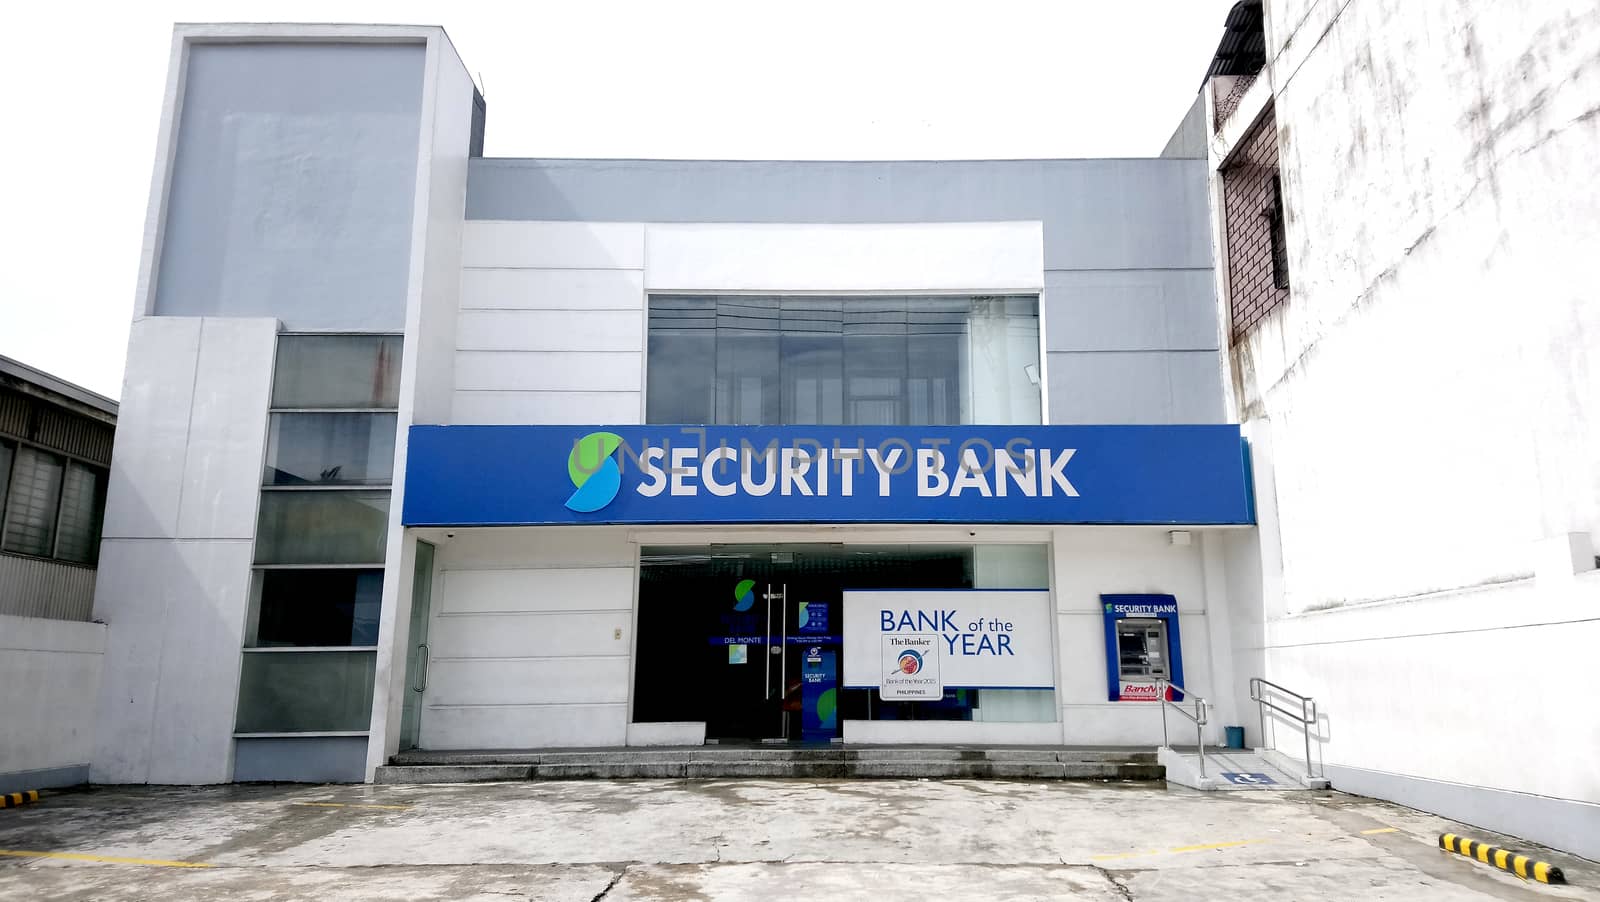 QUEZON CITY, PH - JUNE 2 - Security bank facade on June 2, 2018 in Quezon City, Philippines.